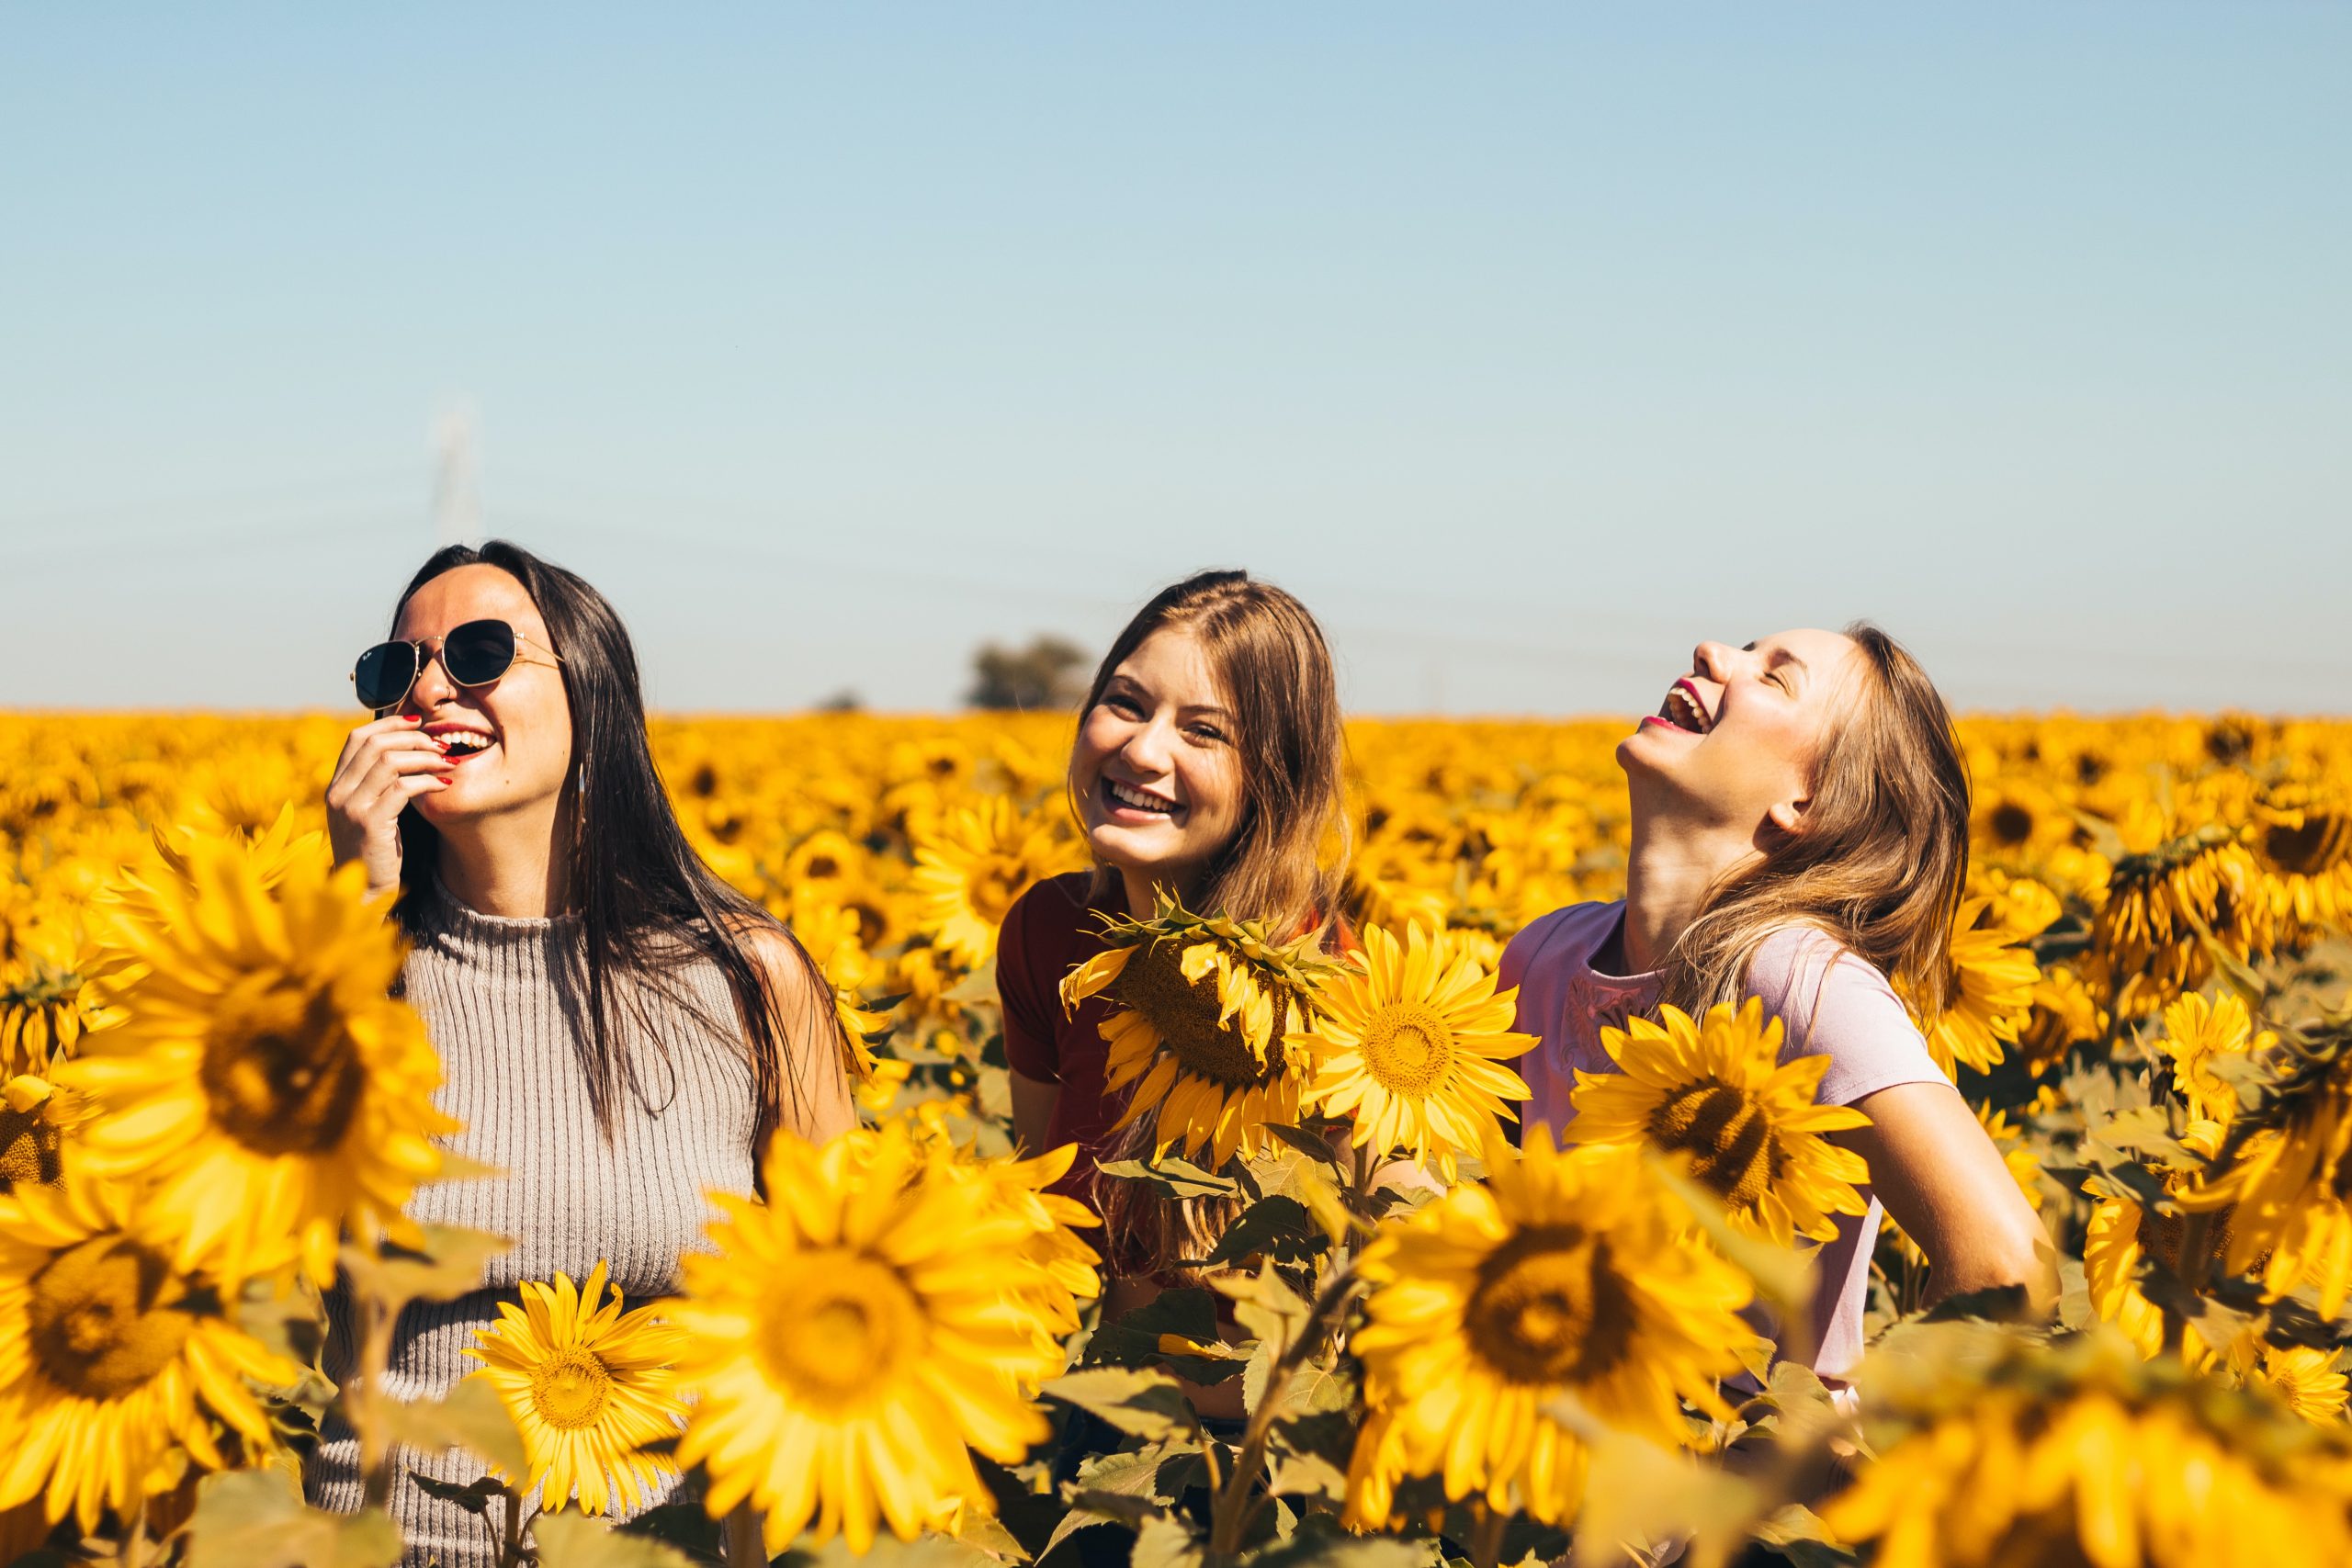 Confident, happy women in a sunflower field.